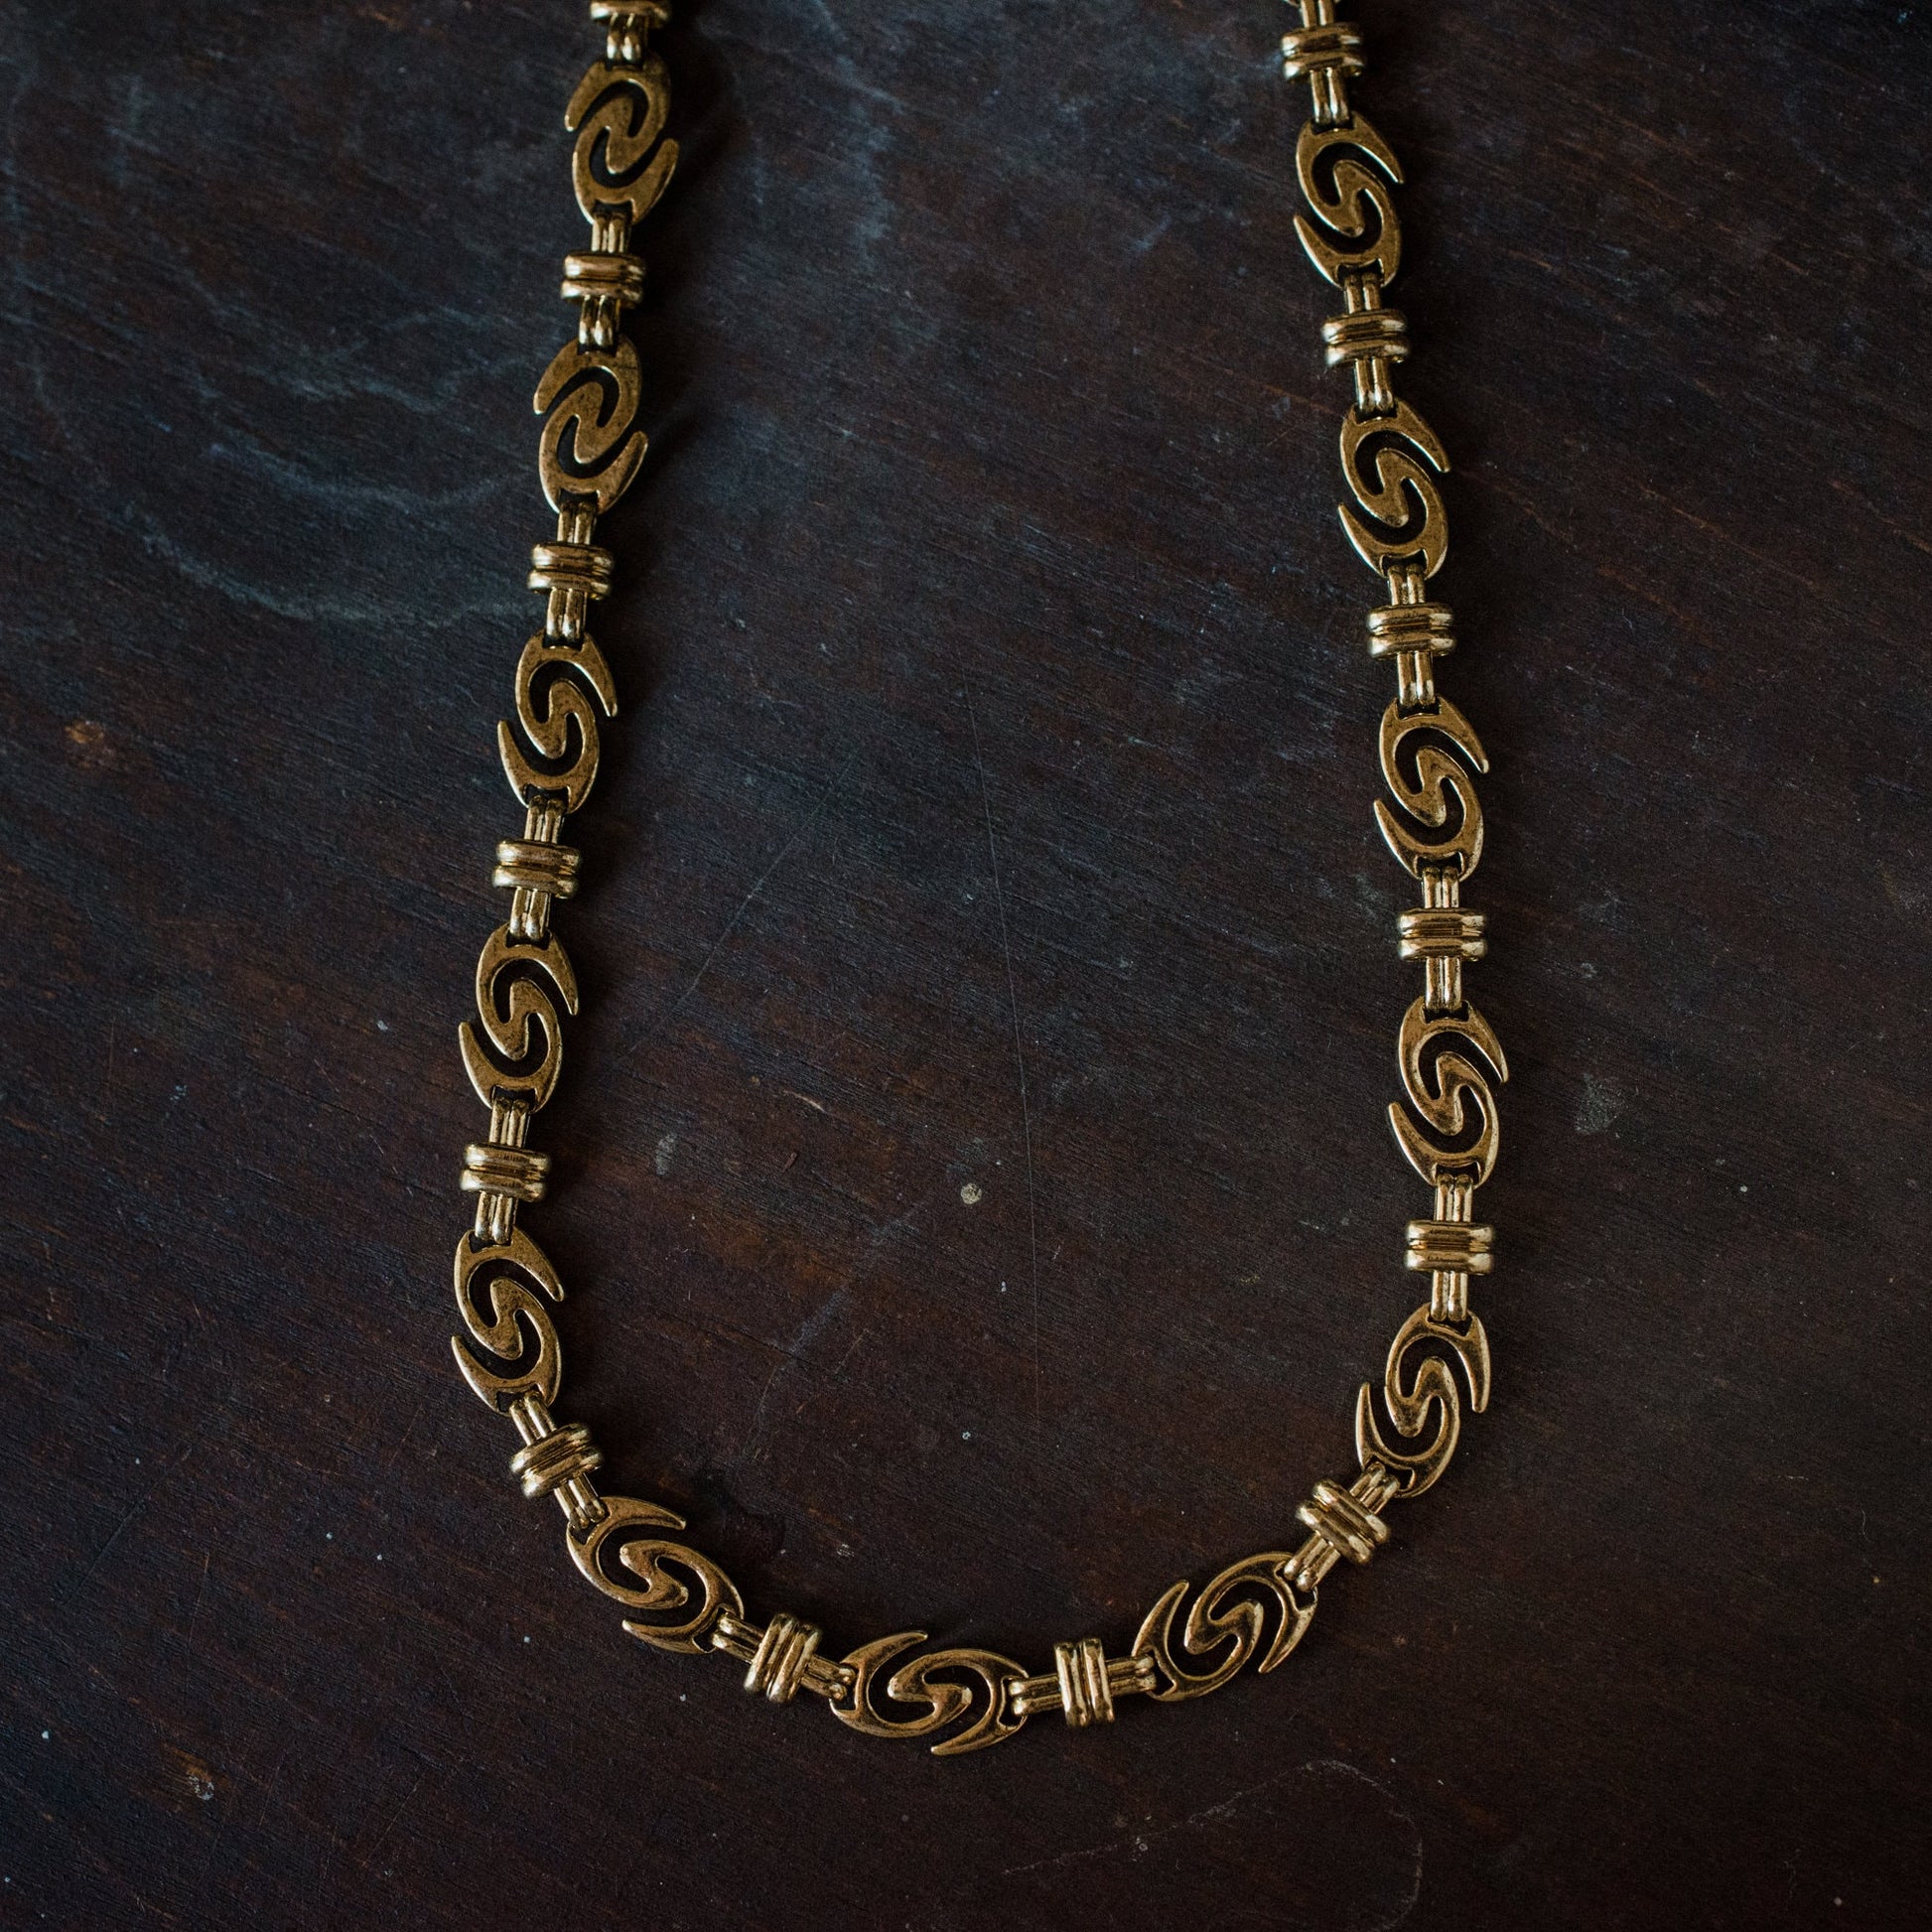 Vintage Oscar de la Renta Signature Logo Necklace Antique Womans Designer Jewelry OSN-114-G - Limited Stock - Never Worn